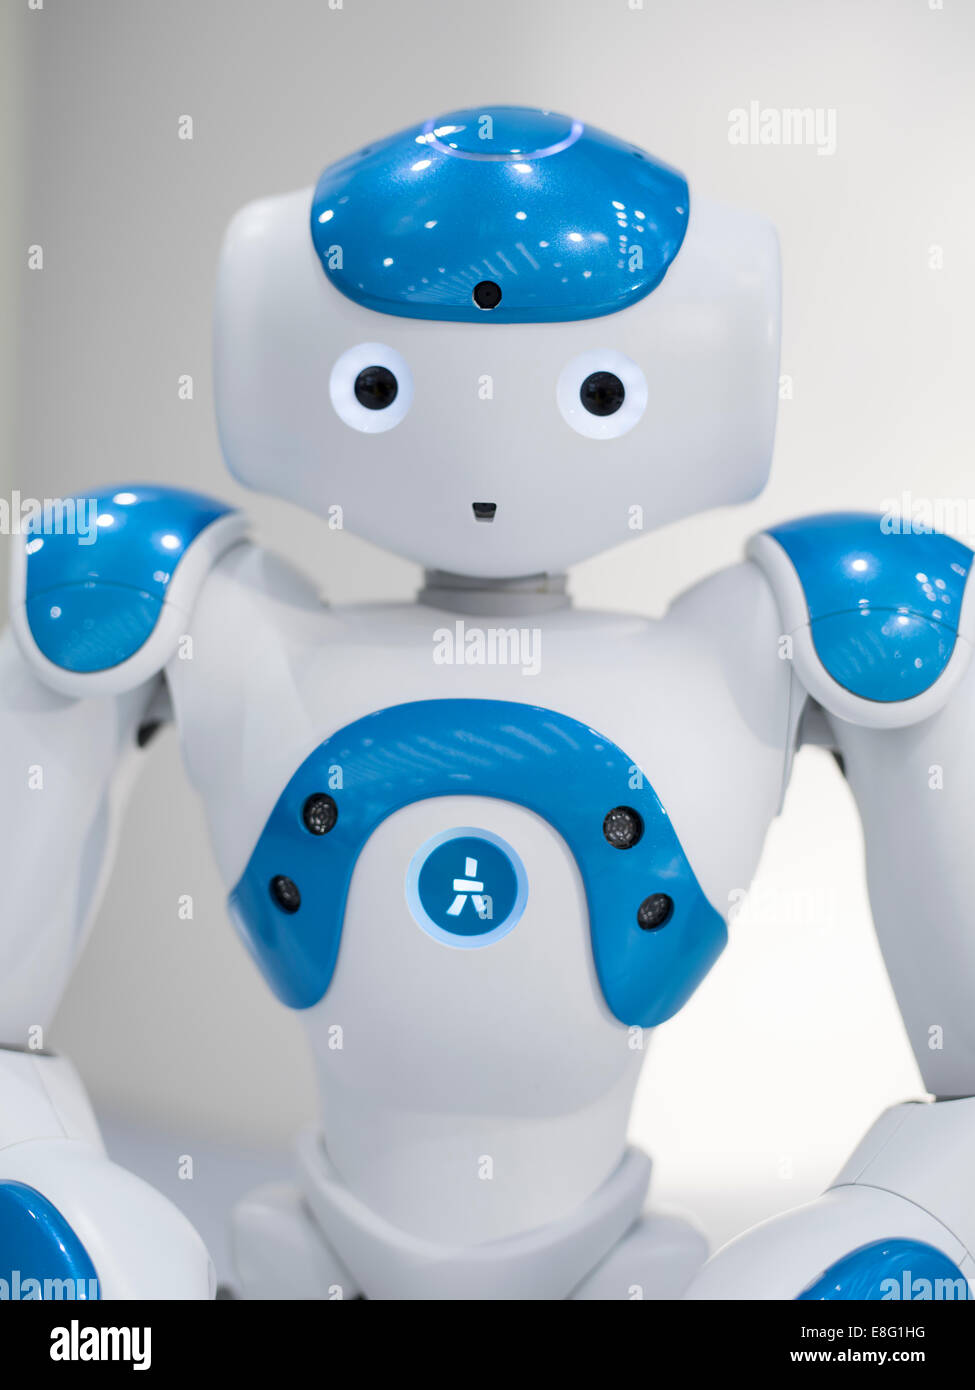 Nao an autonomous, programmable humanoid robot by Aldebaran Robotics. Stock Photo